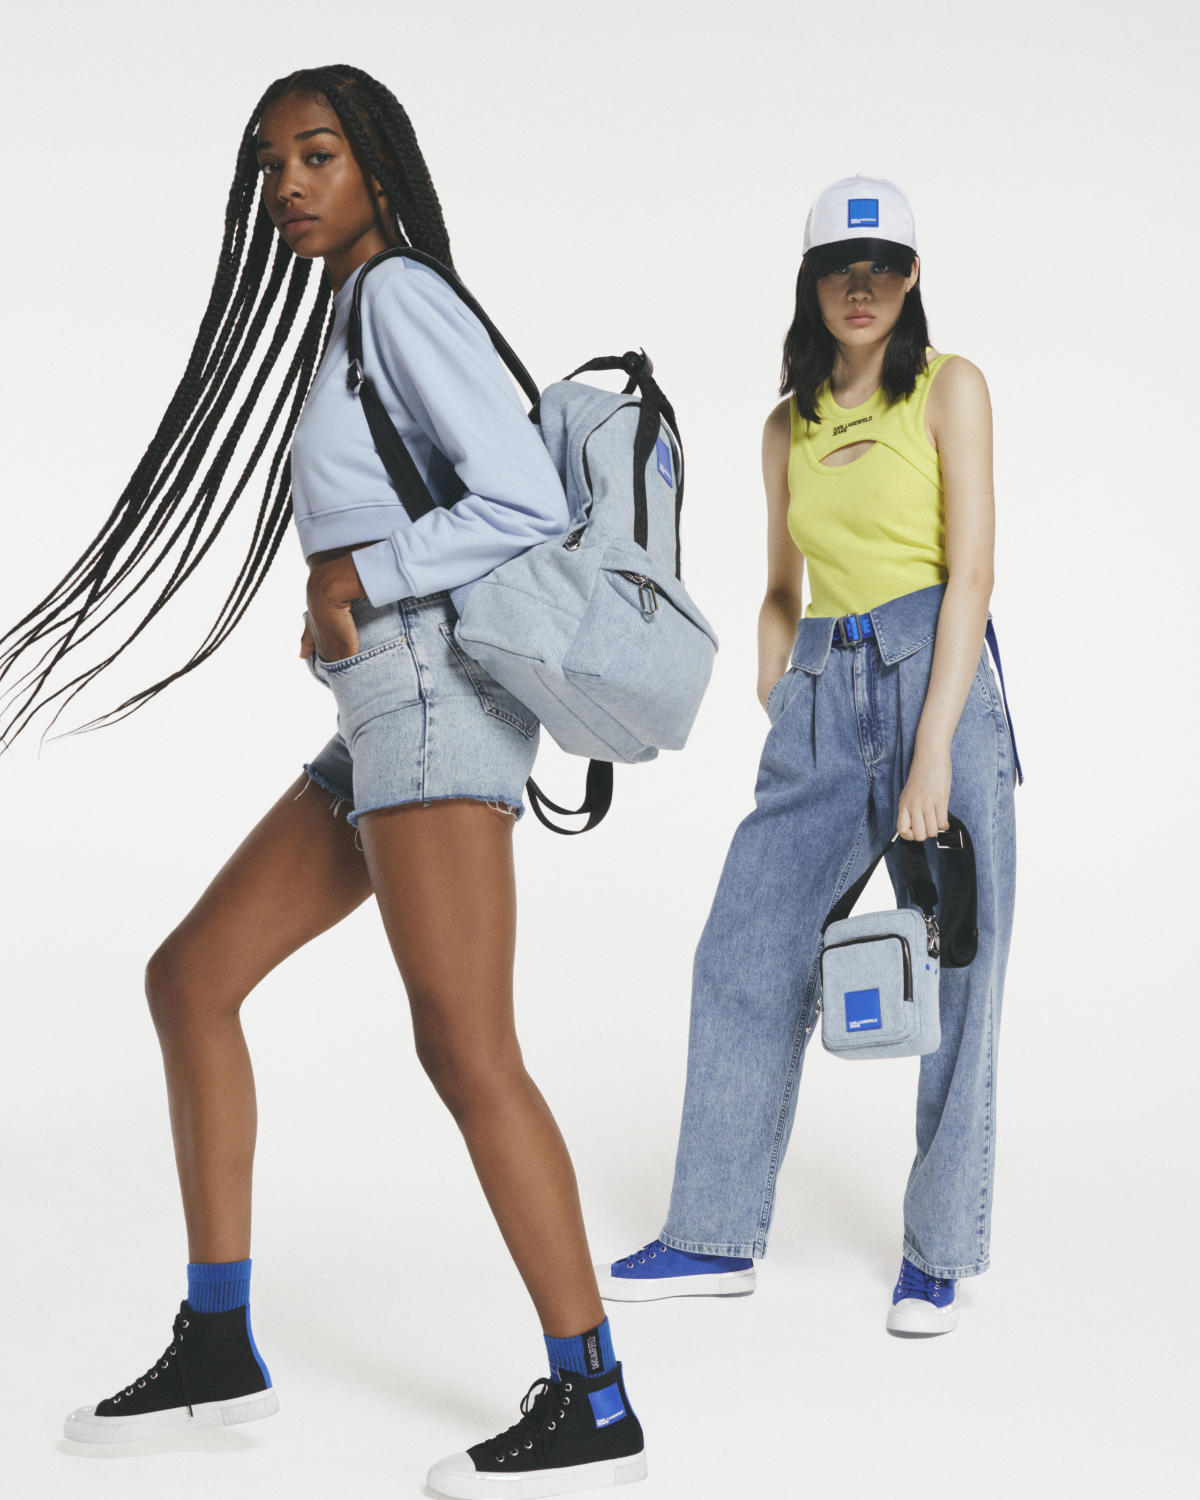 Karl Lagerfeld Taps Into Gen Z Audience With Digitally Driven New Denim Brand: Karl Lagerfeld Jeans